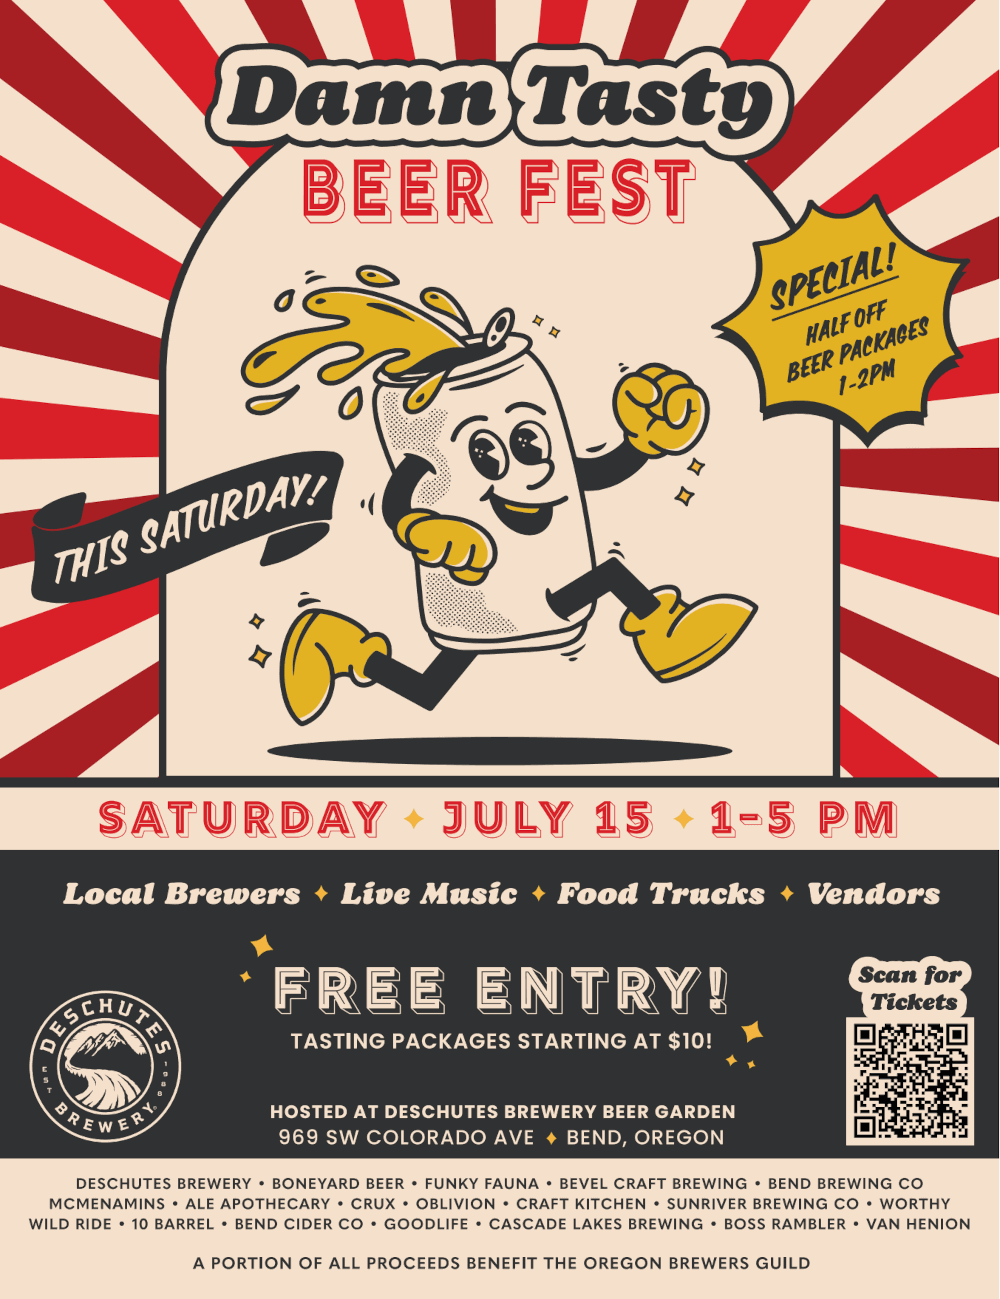 Deschutes Brewery hosts its Damn Tasty Beer Fest Saturday, July 15